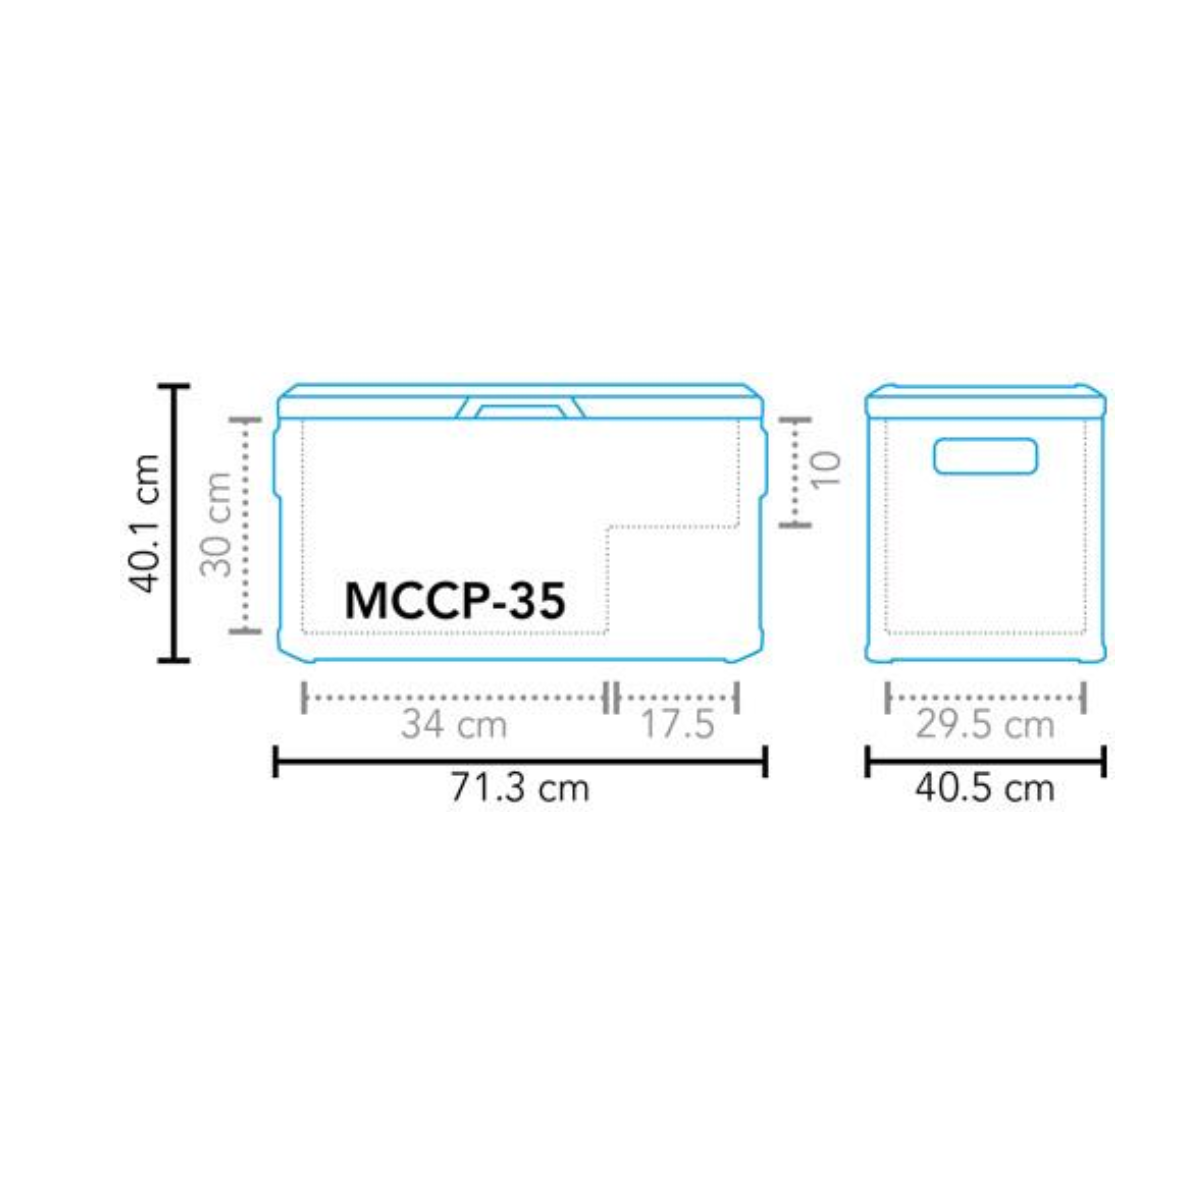 Mestic MCCP-35 Kompressorkuehlbox - 1512620